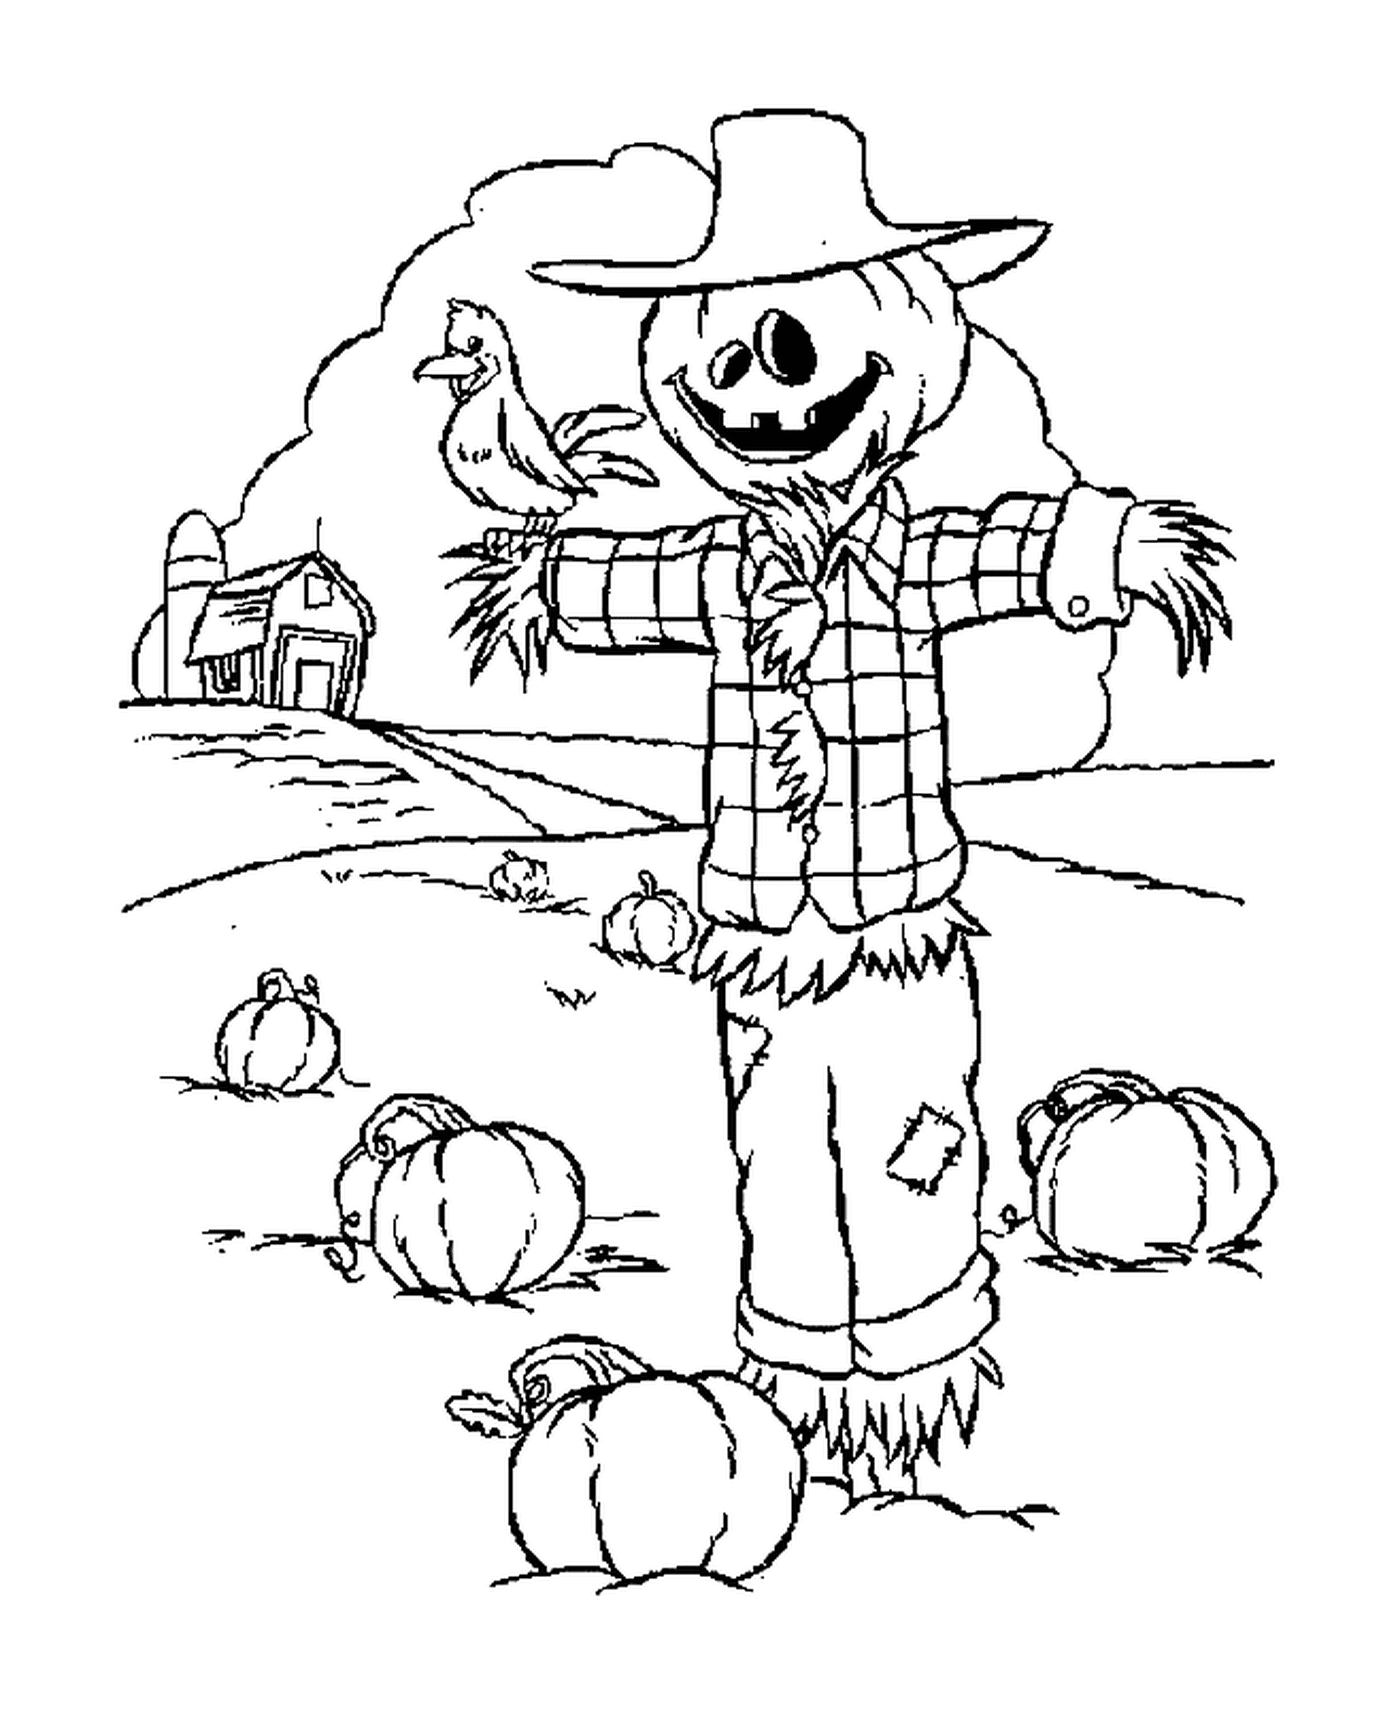  Scarecrow with pumpkin head in pumpkin field 